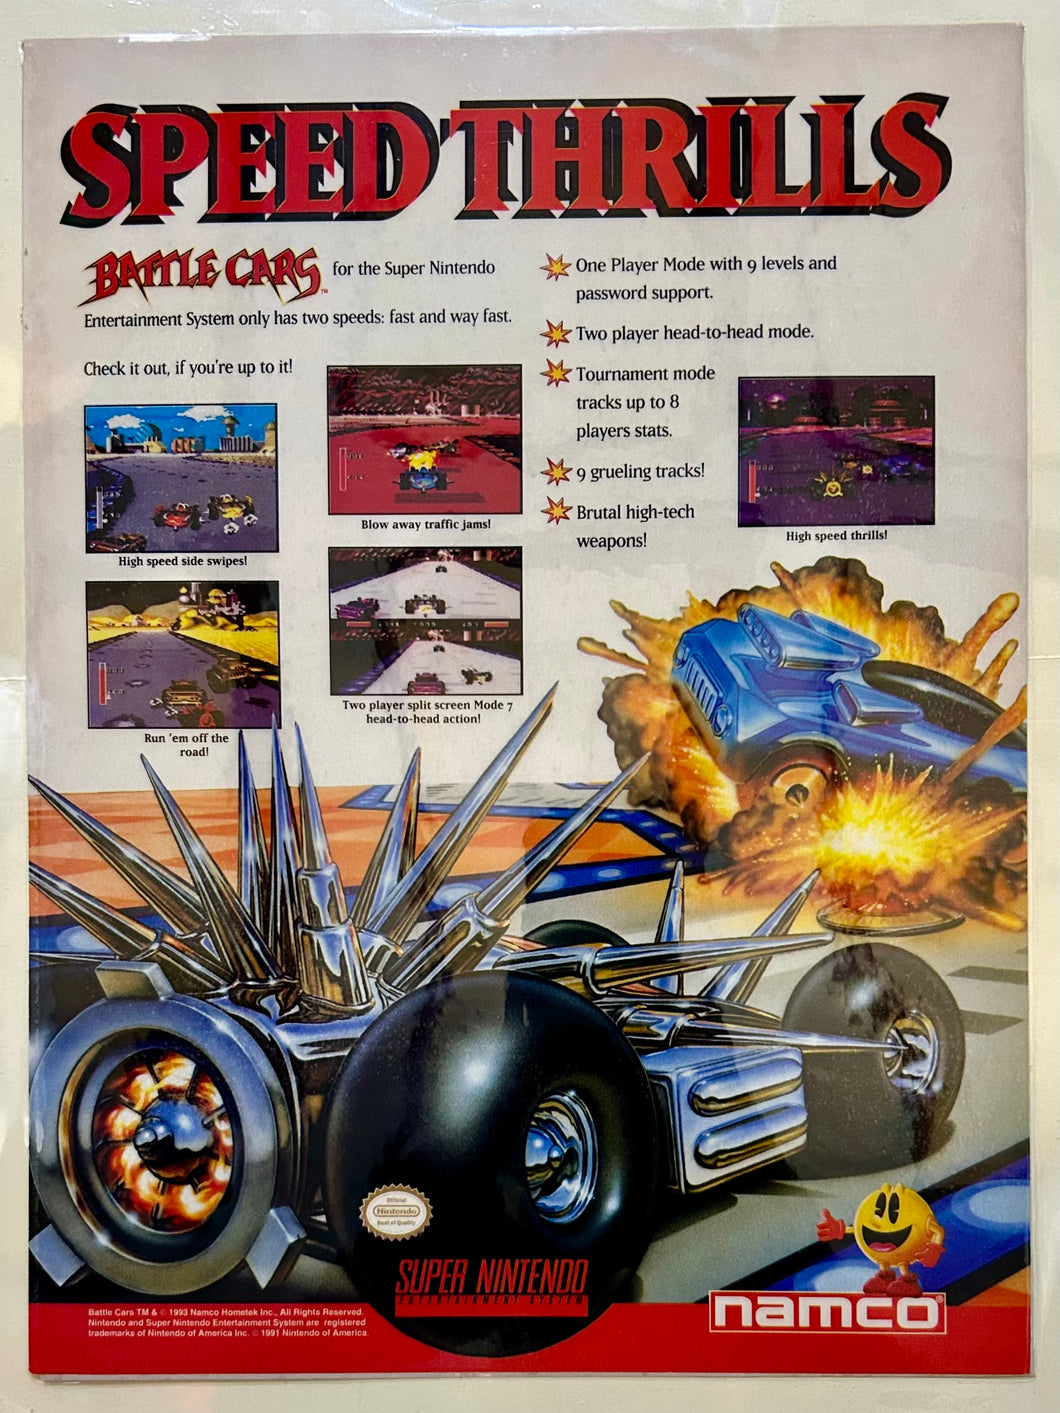 Battle Cars - SNES - Original Vintage Advertisement - Print Ads - Laminated A4 Poster